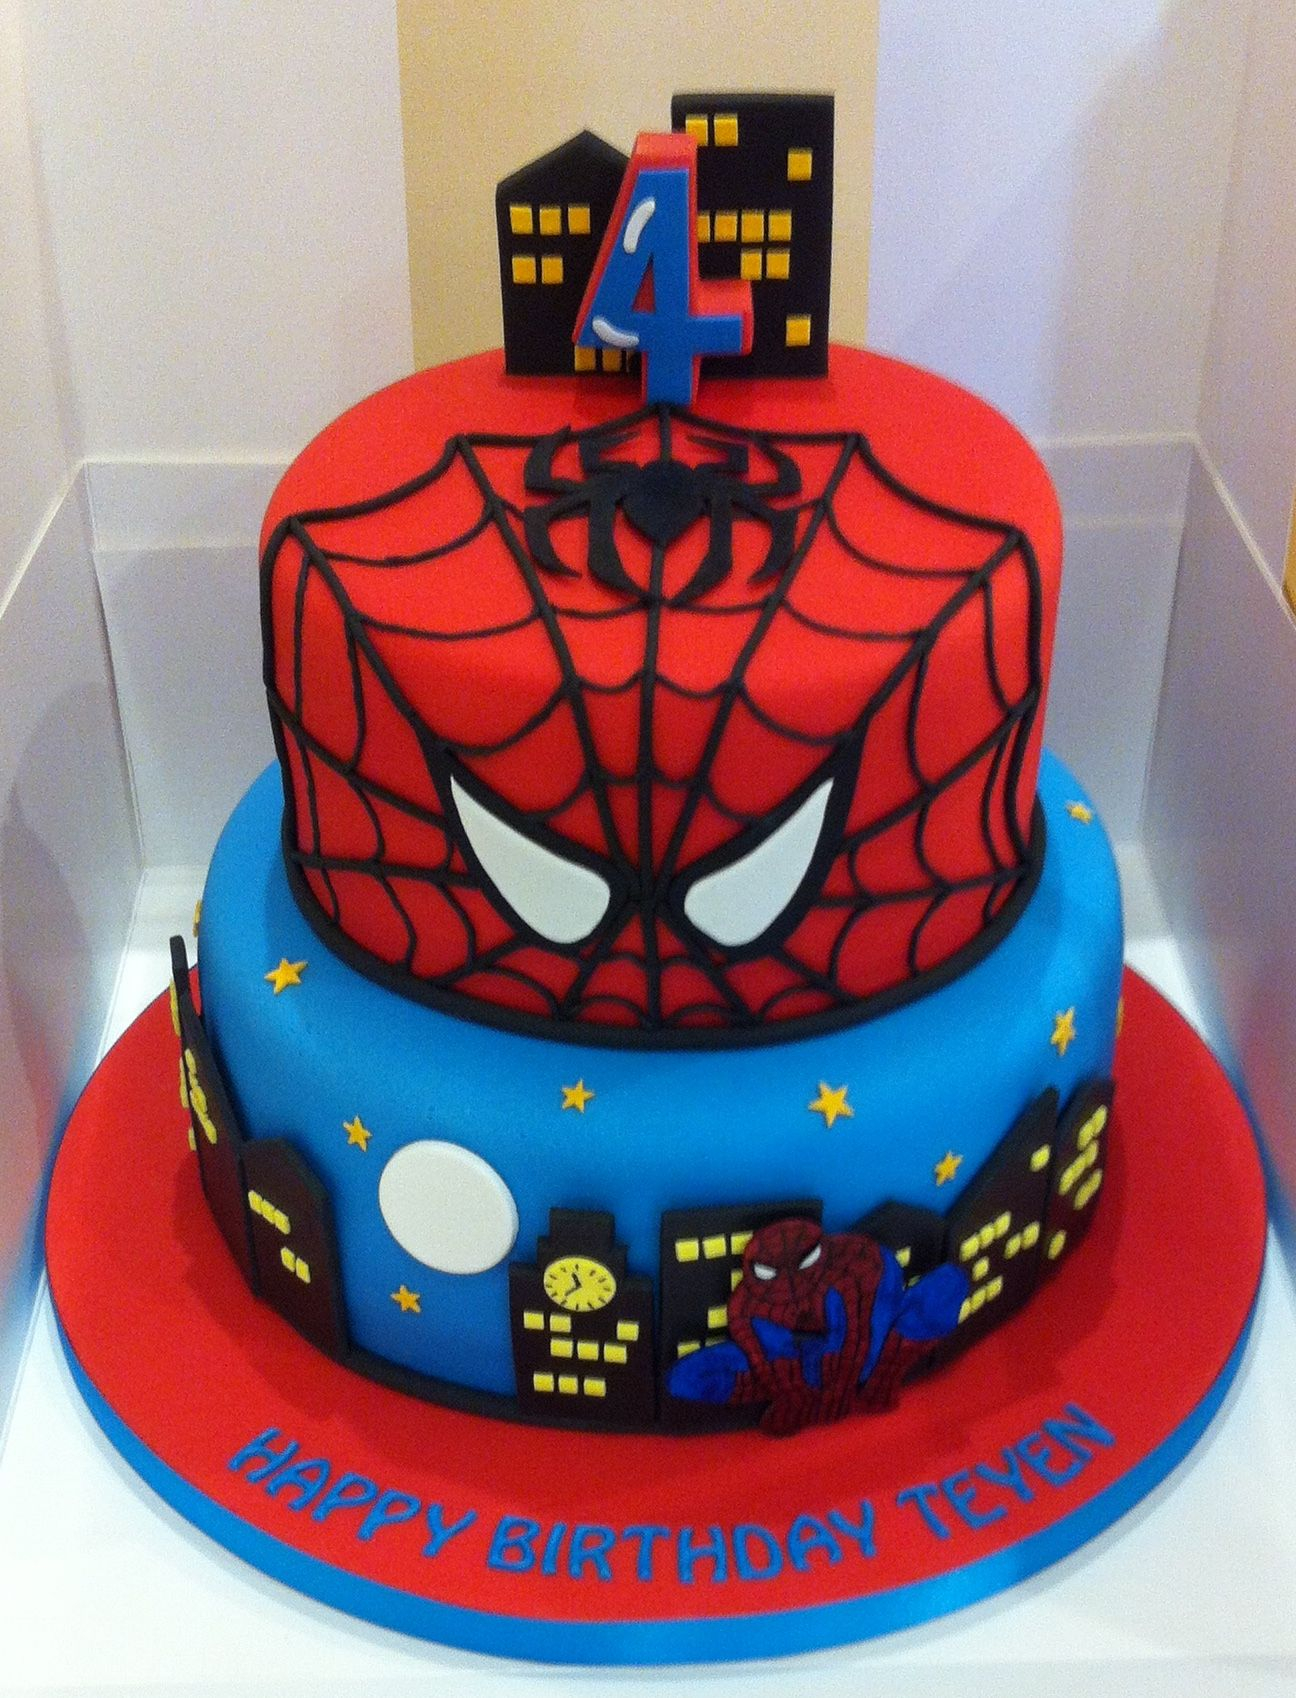 Spiderman Birthday Cakes Spider Man Cake Party Pinterest Birthday Cake And Birthday Cake